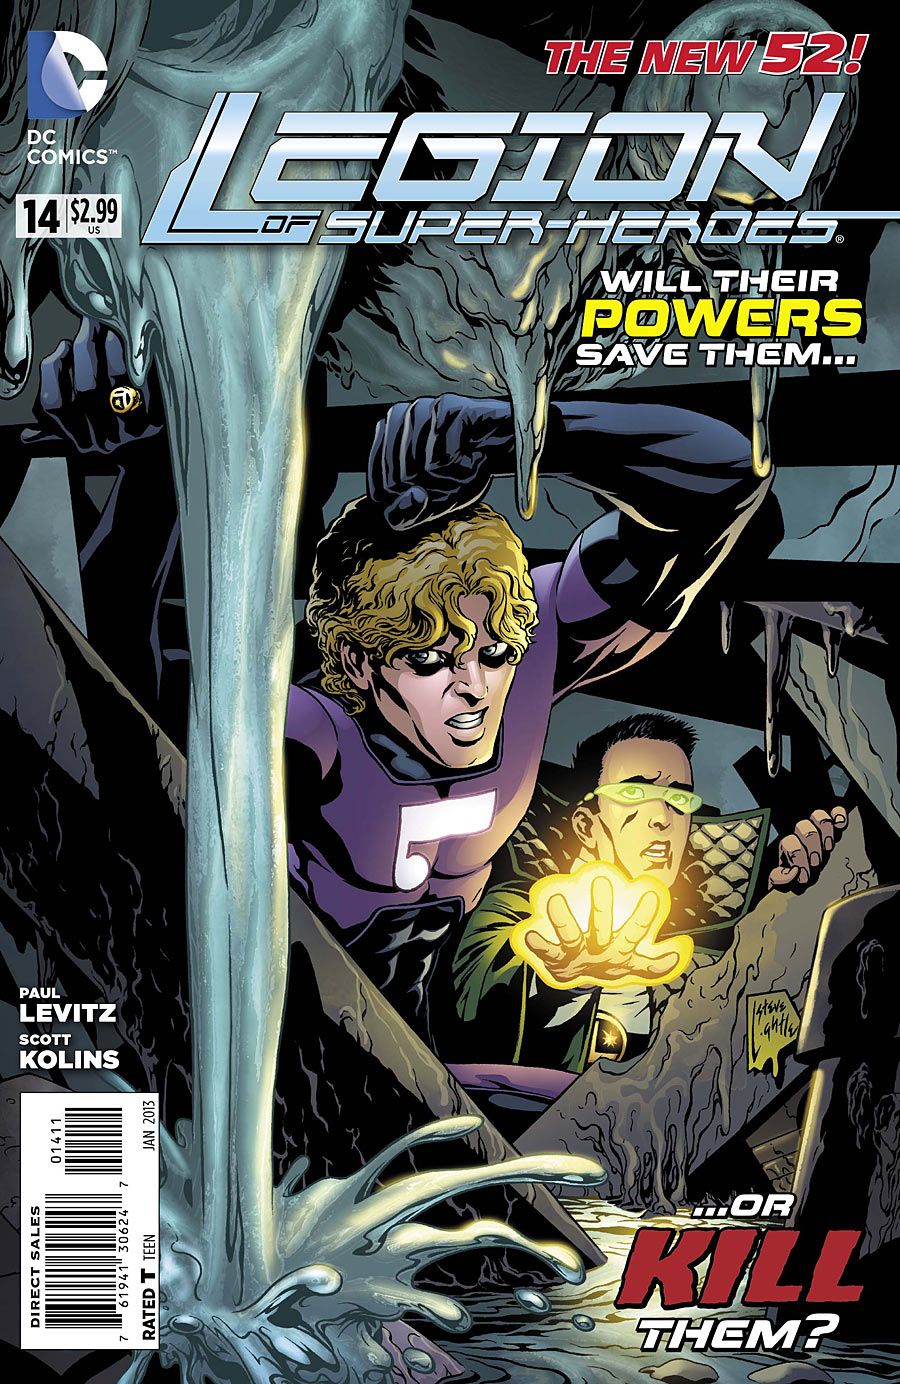 Legion of Super-Heroes #14 Comic